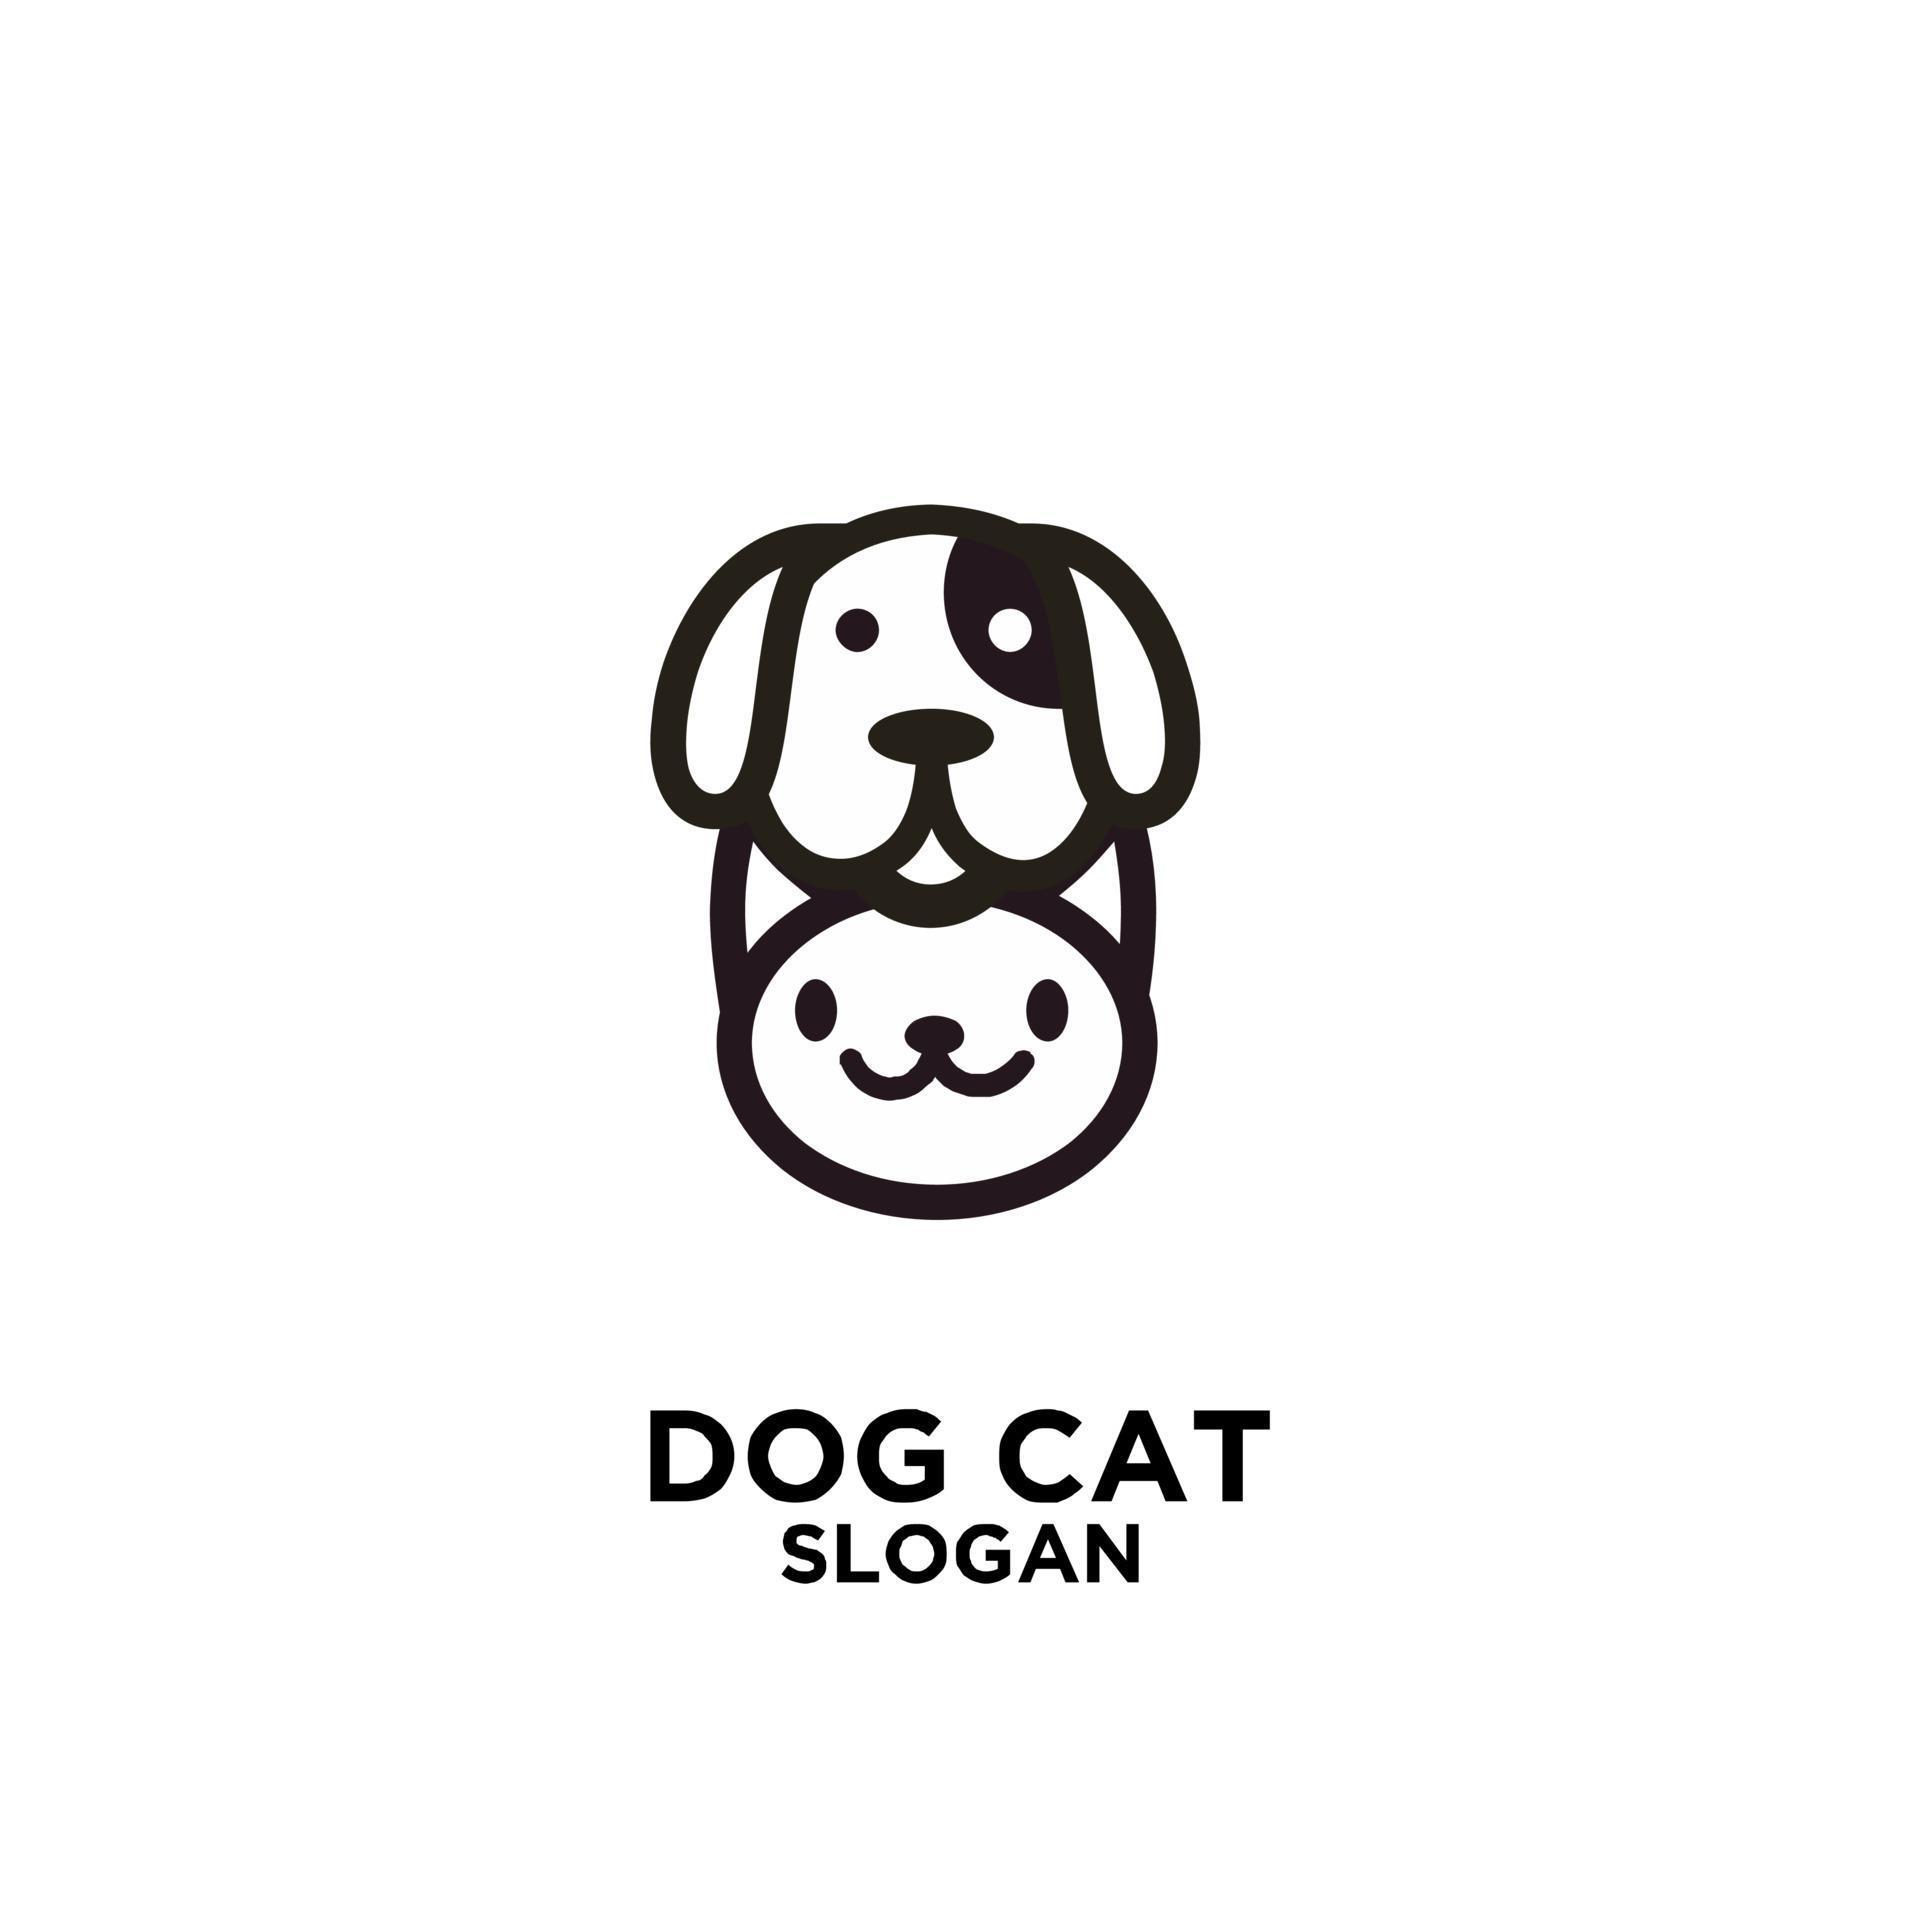 simple cute dog vector black logo icon design